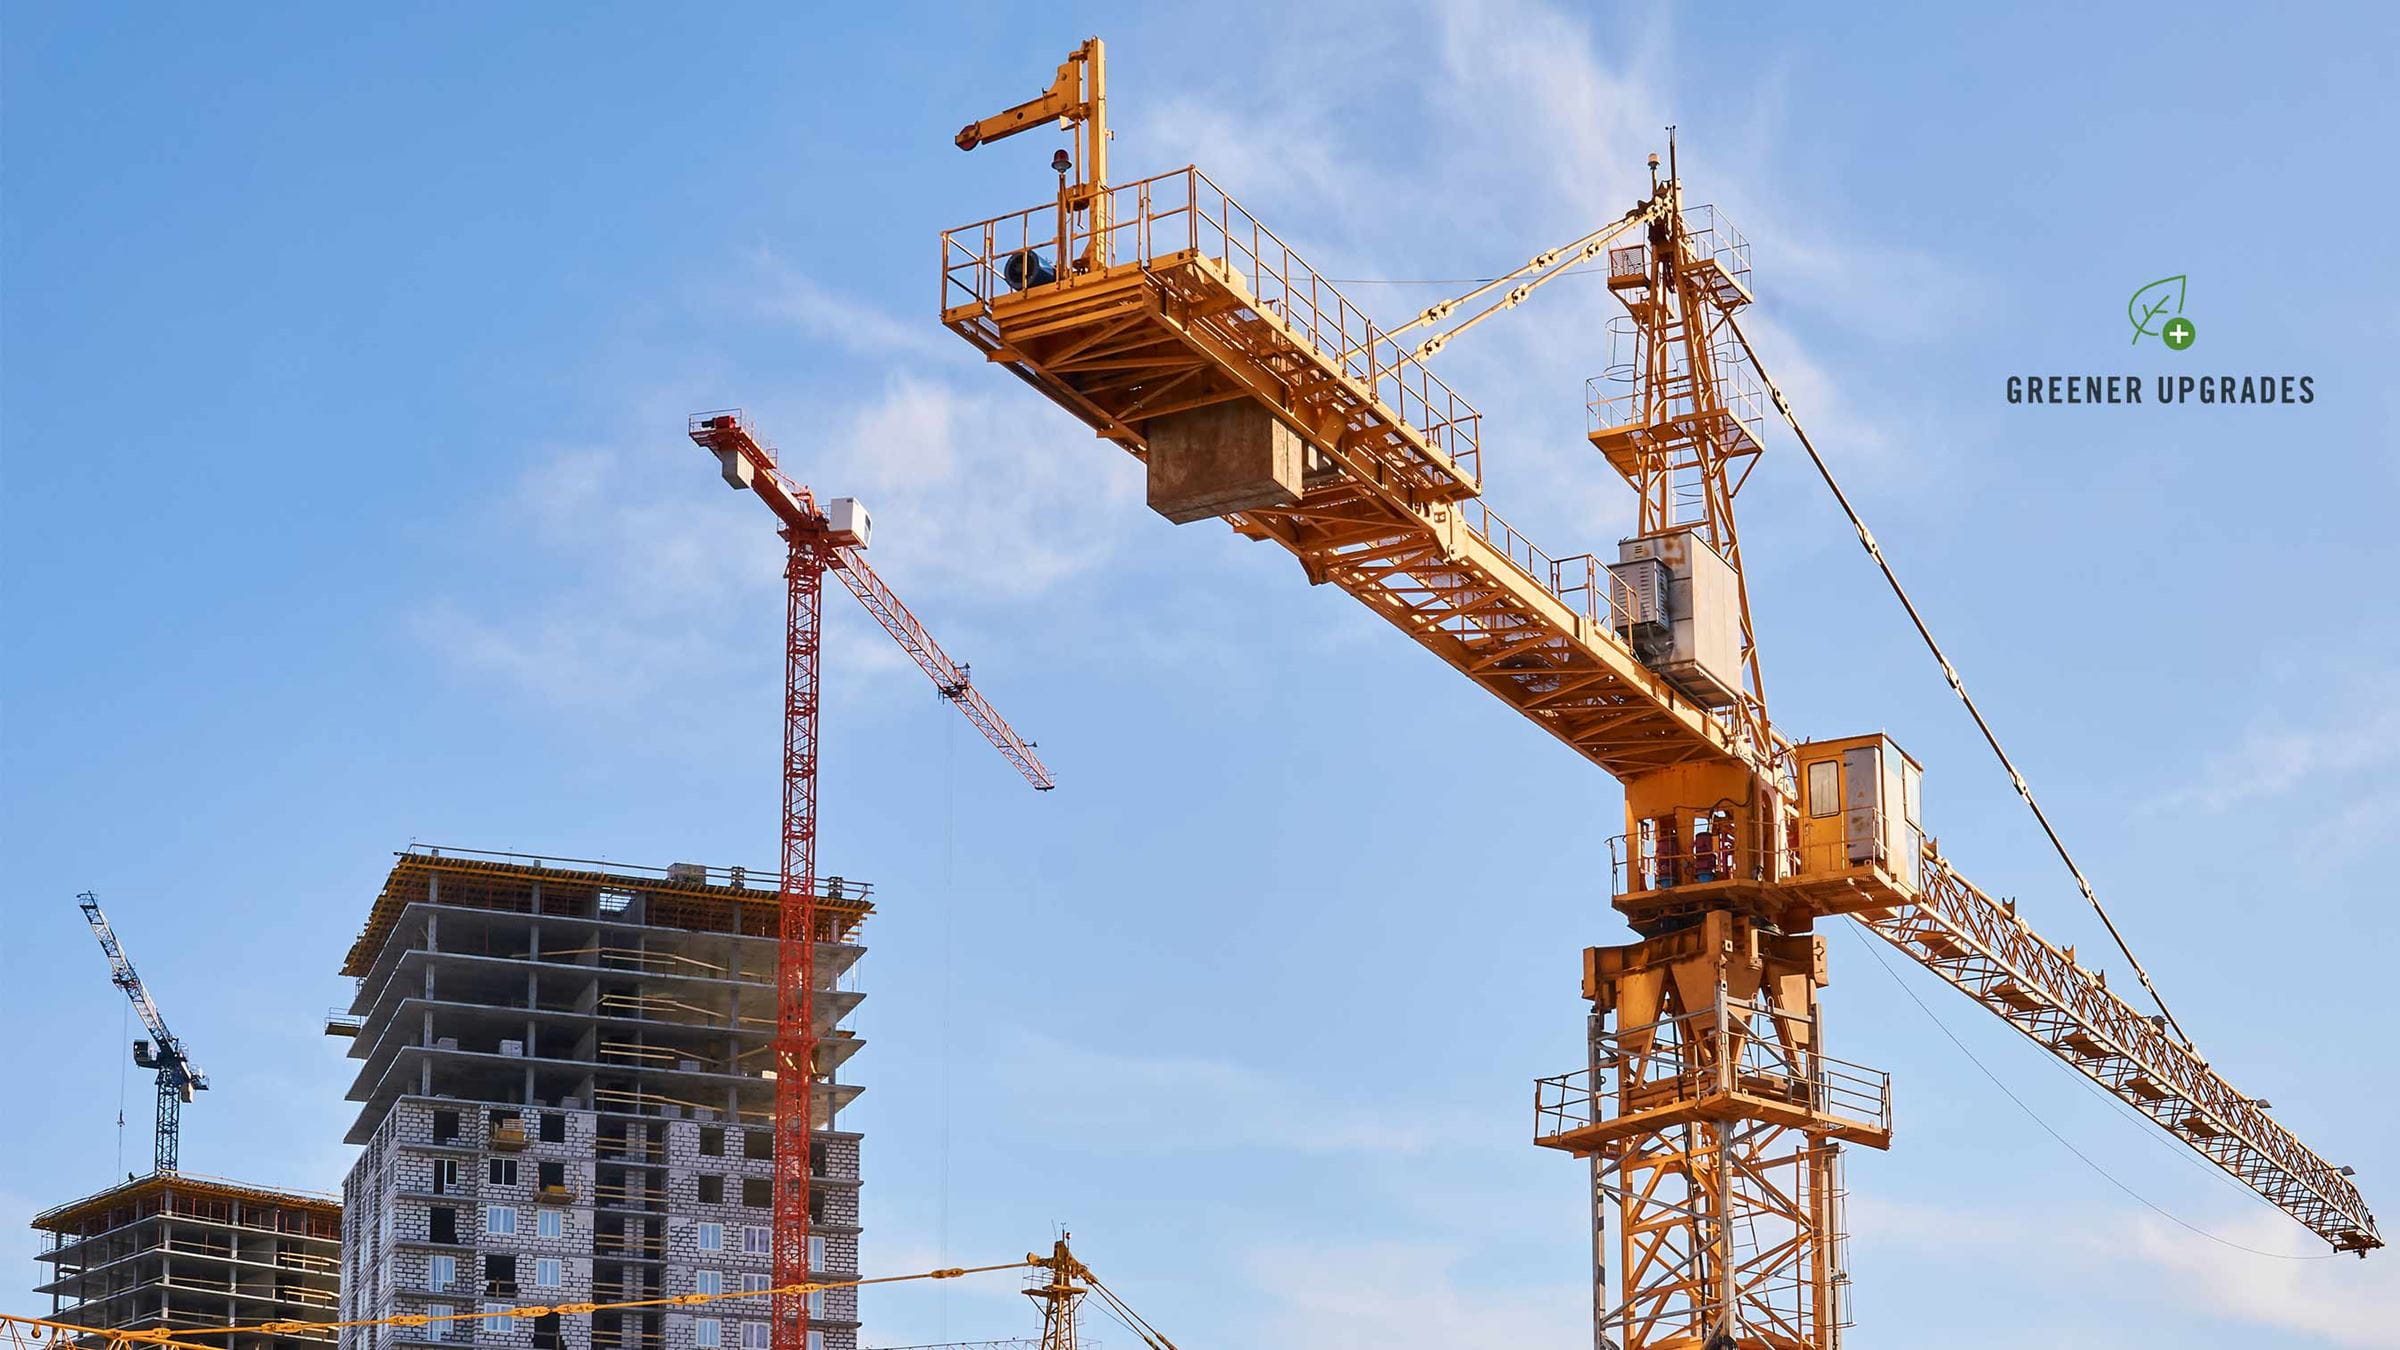 Cranes are featured alongside buildings under construction